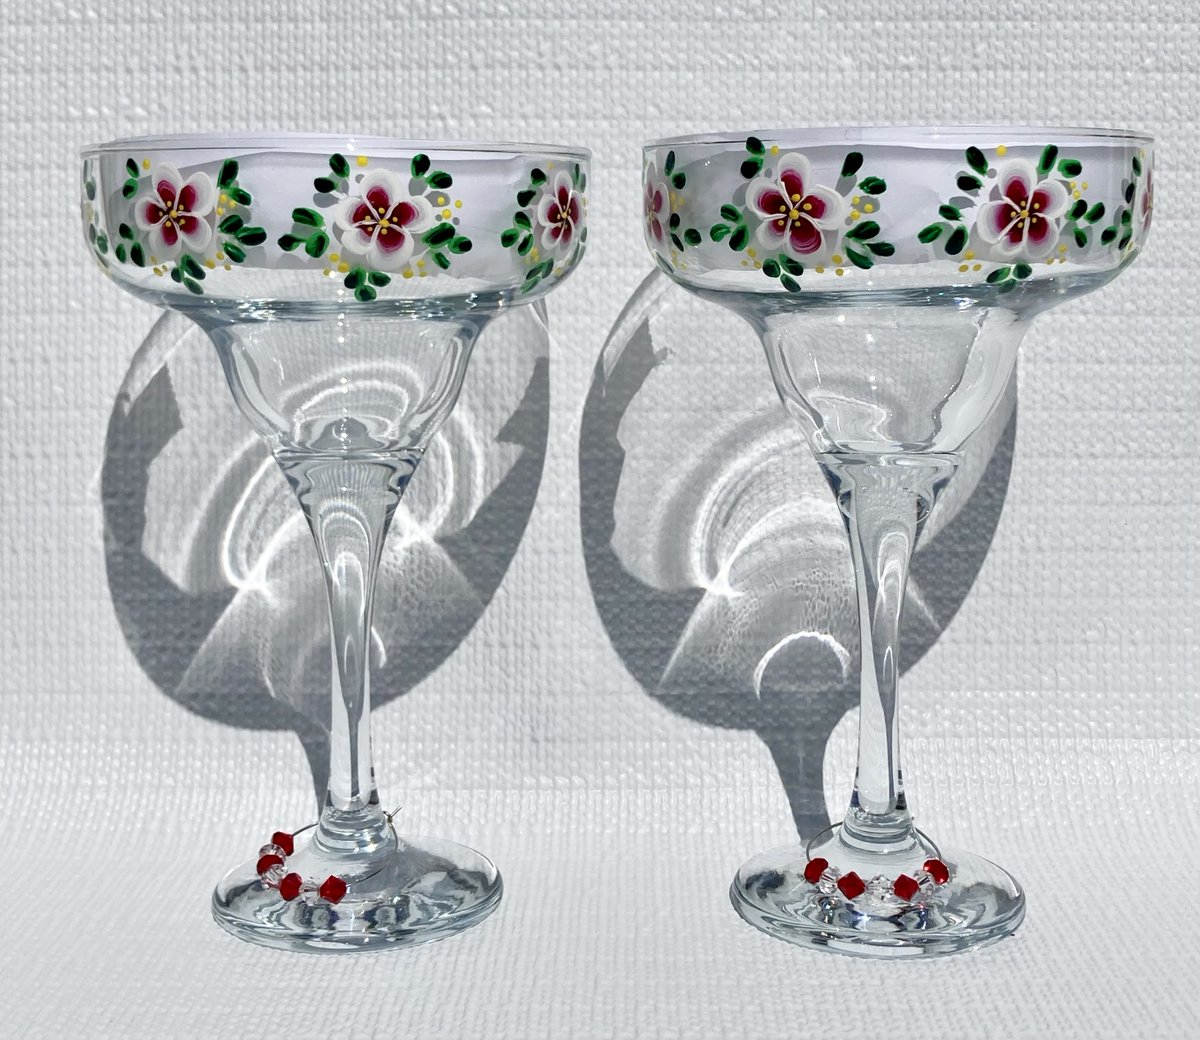 Cool Summer glasses etsy.com/listing/143304… #summerglasses #handpainted #birthdaygift #SMILEtt23 #craftBizParty #etsy #etsylove